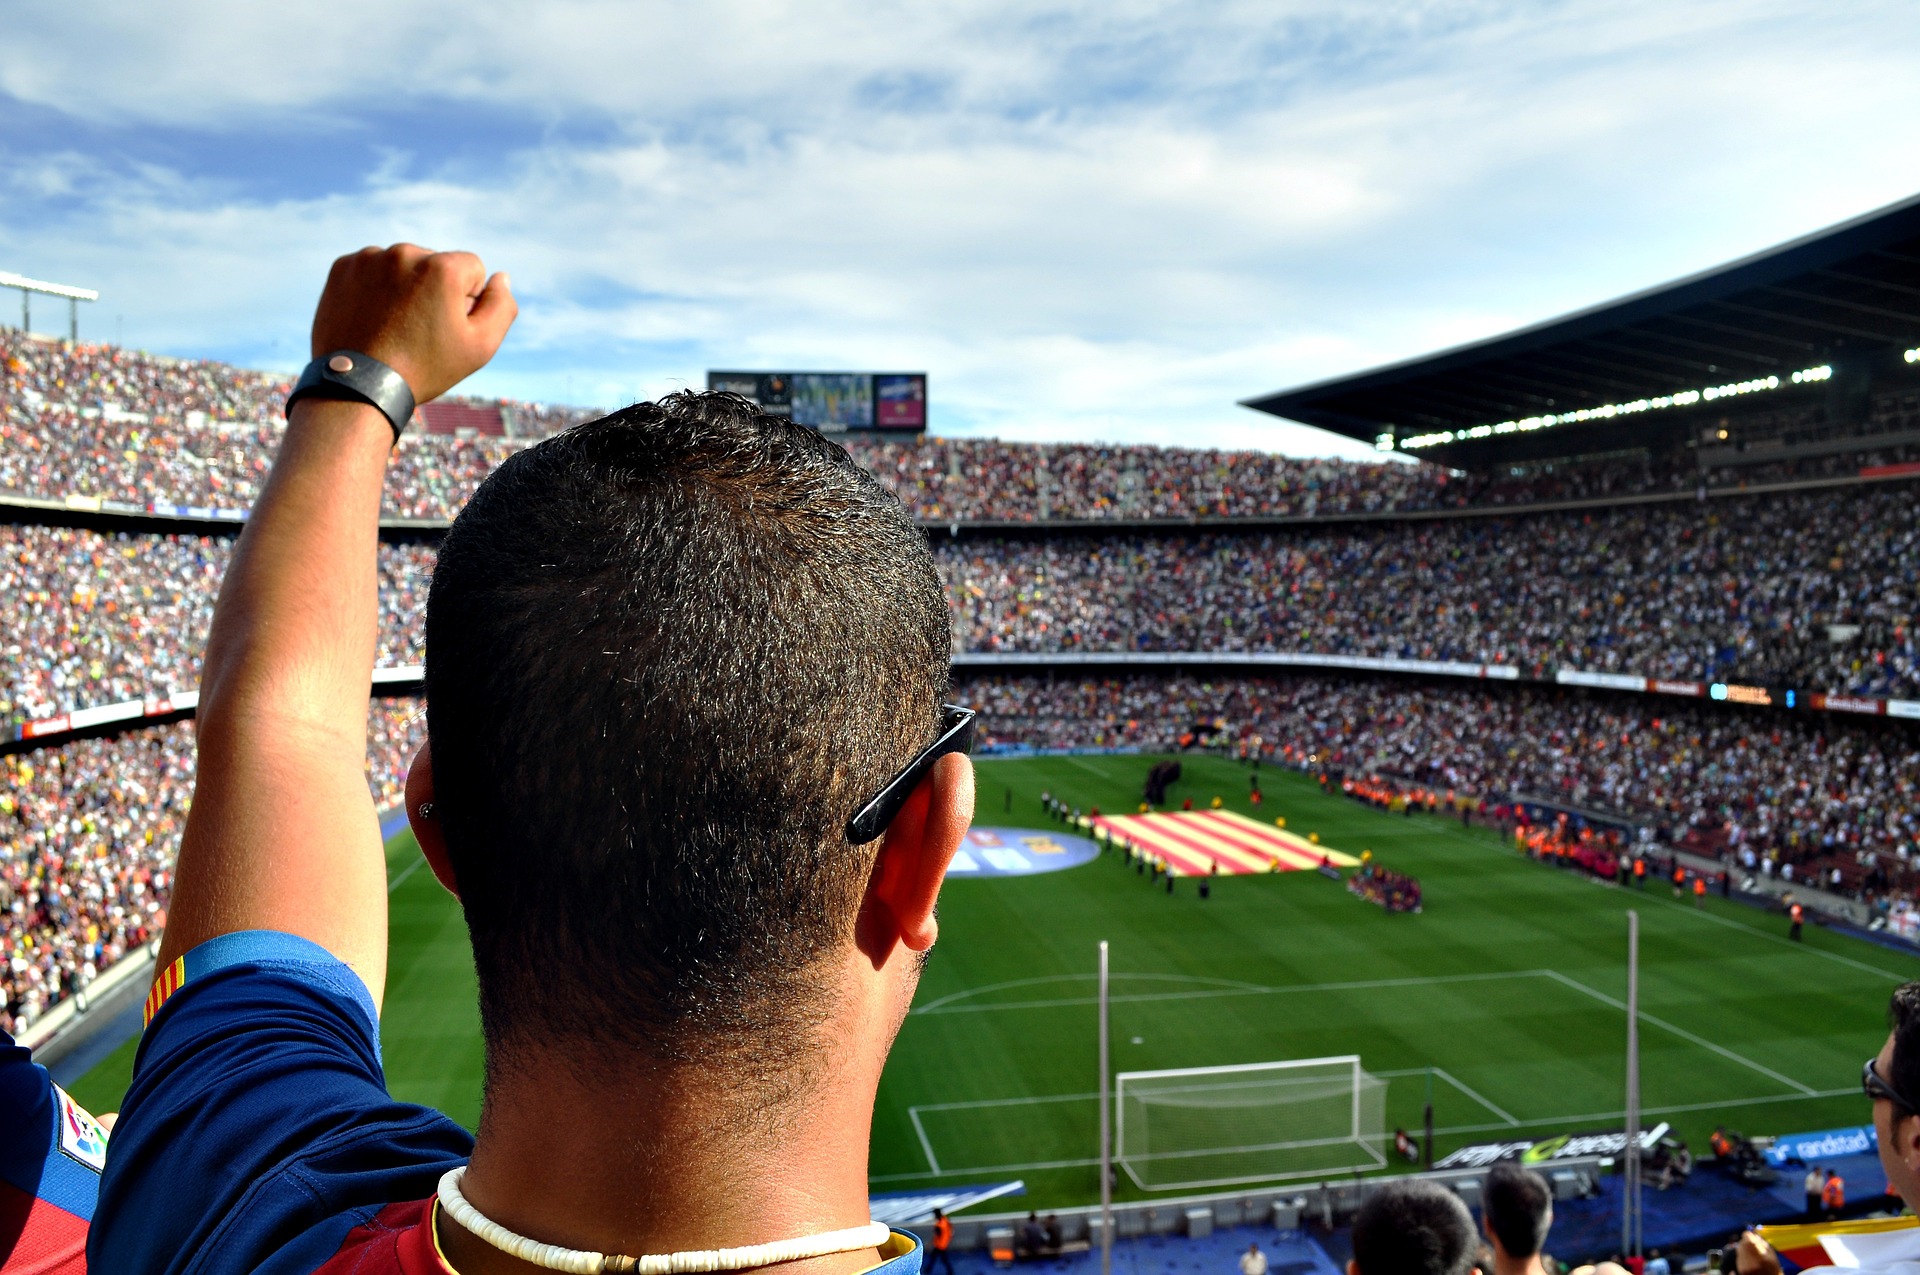 A man is raising hand during football match